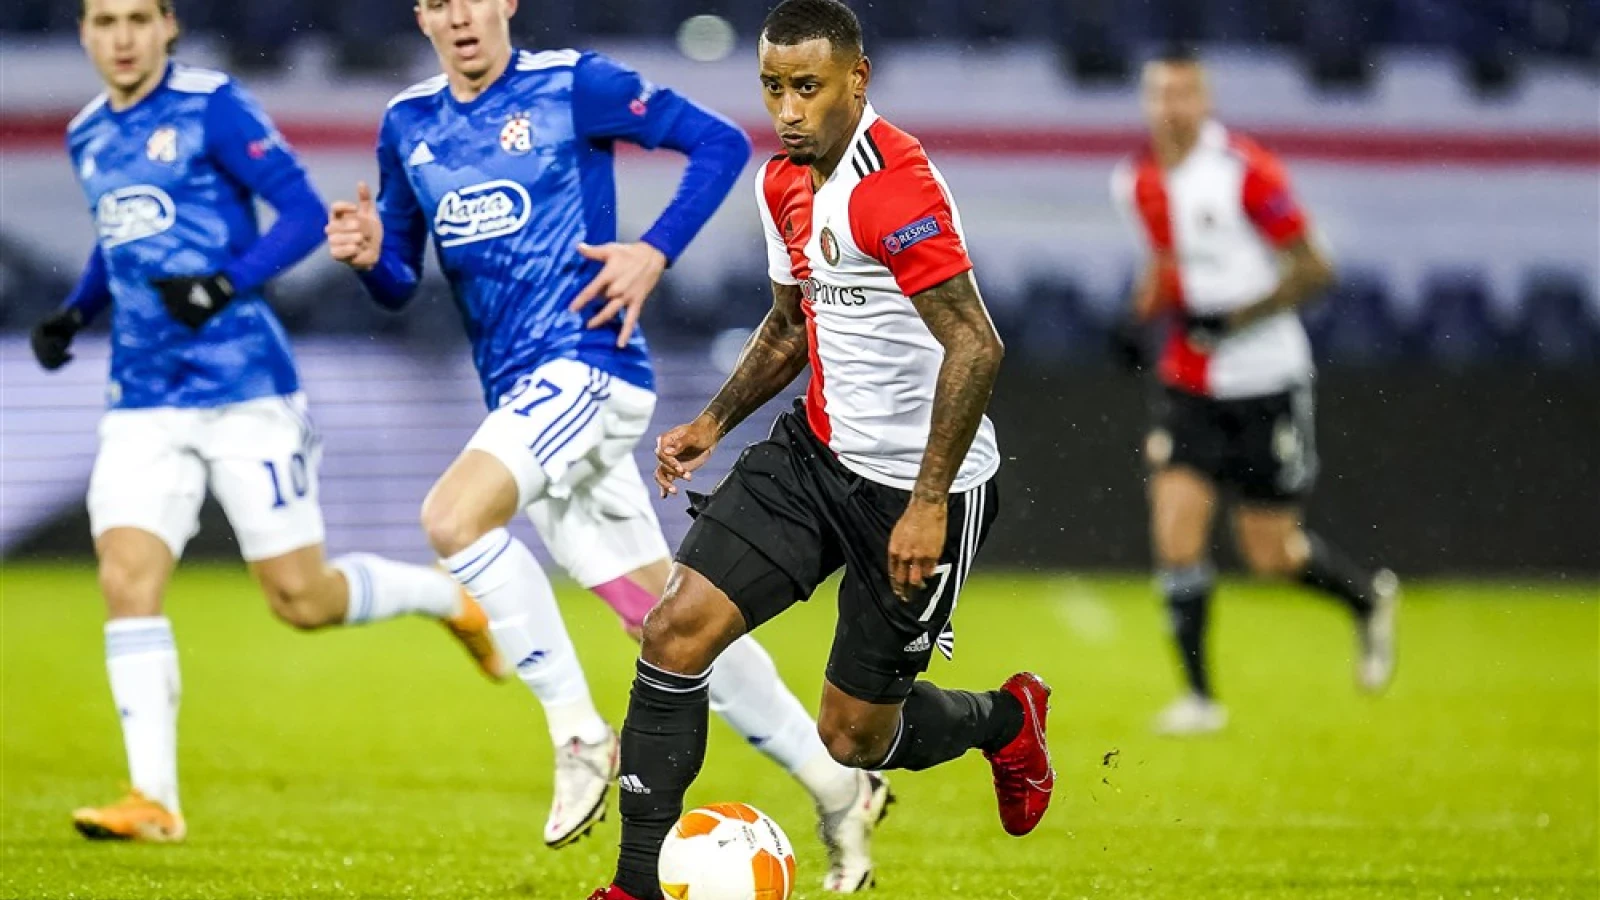 LIVE | Feyenoord - Dinamo Zagreb 0-2 | Einde wedstrijd